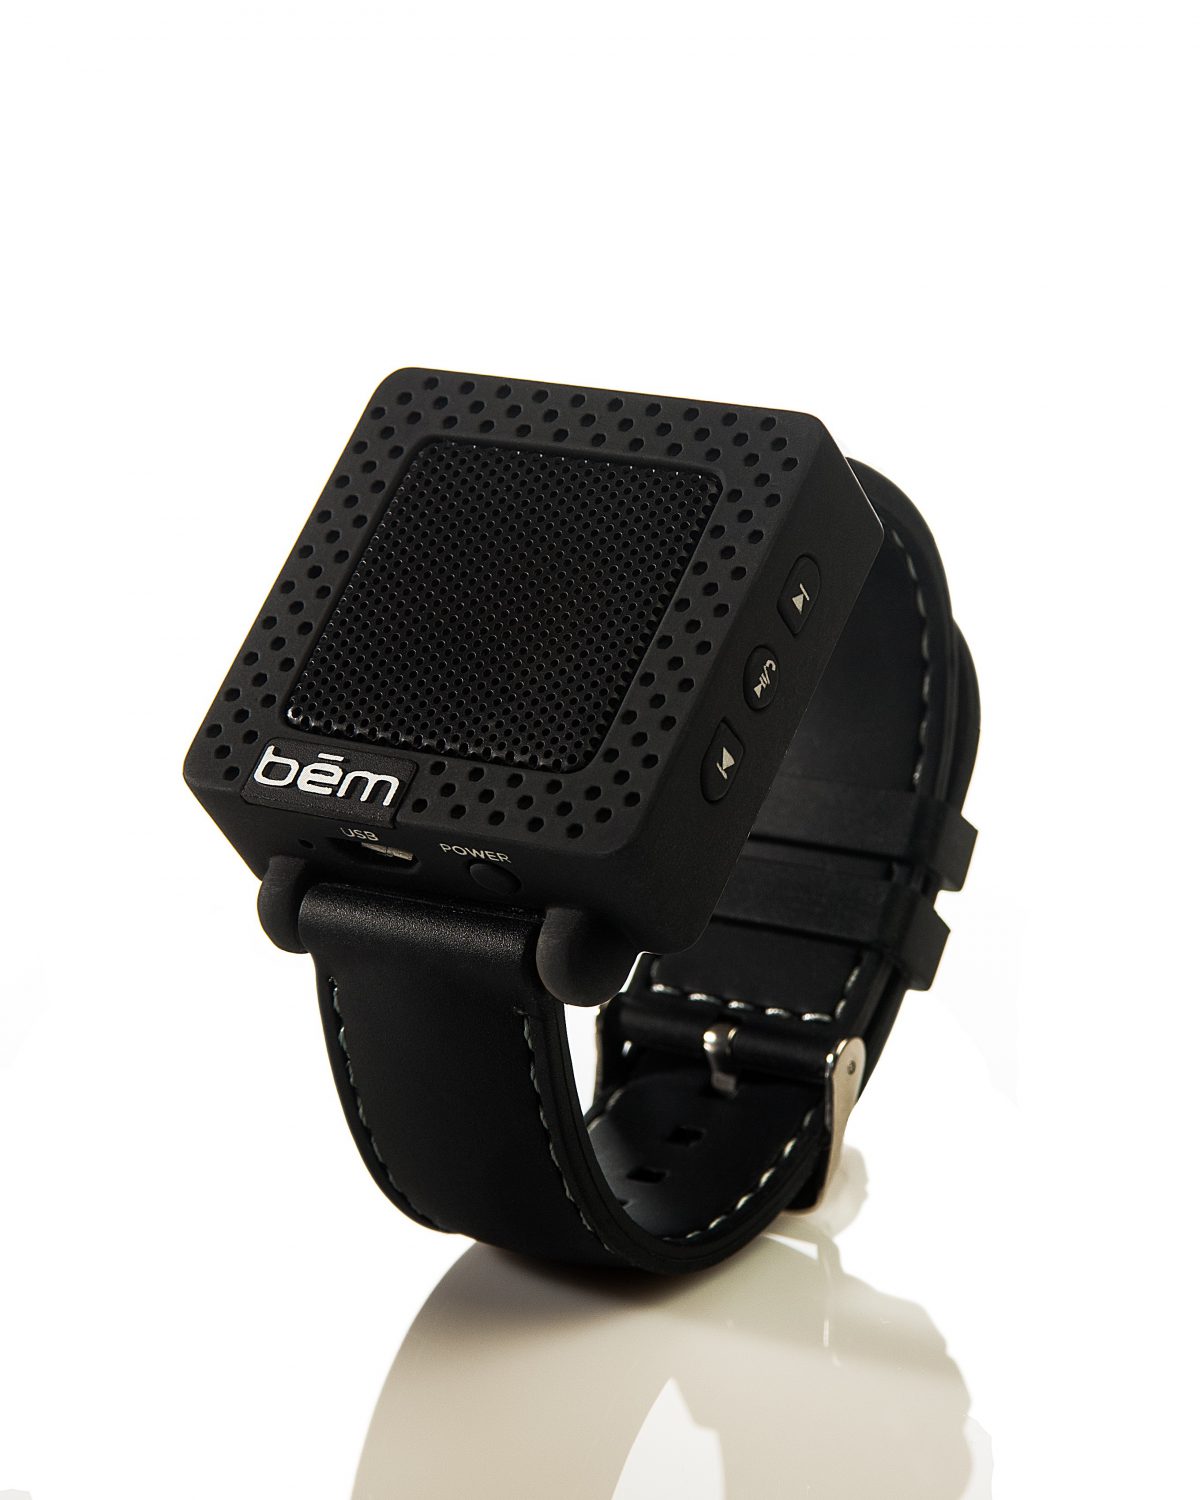 Bem's Bluetooth Speaker Band Makes You Feel Like Dick Tracy